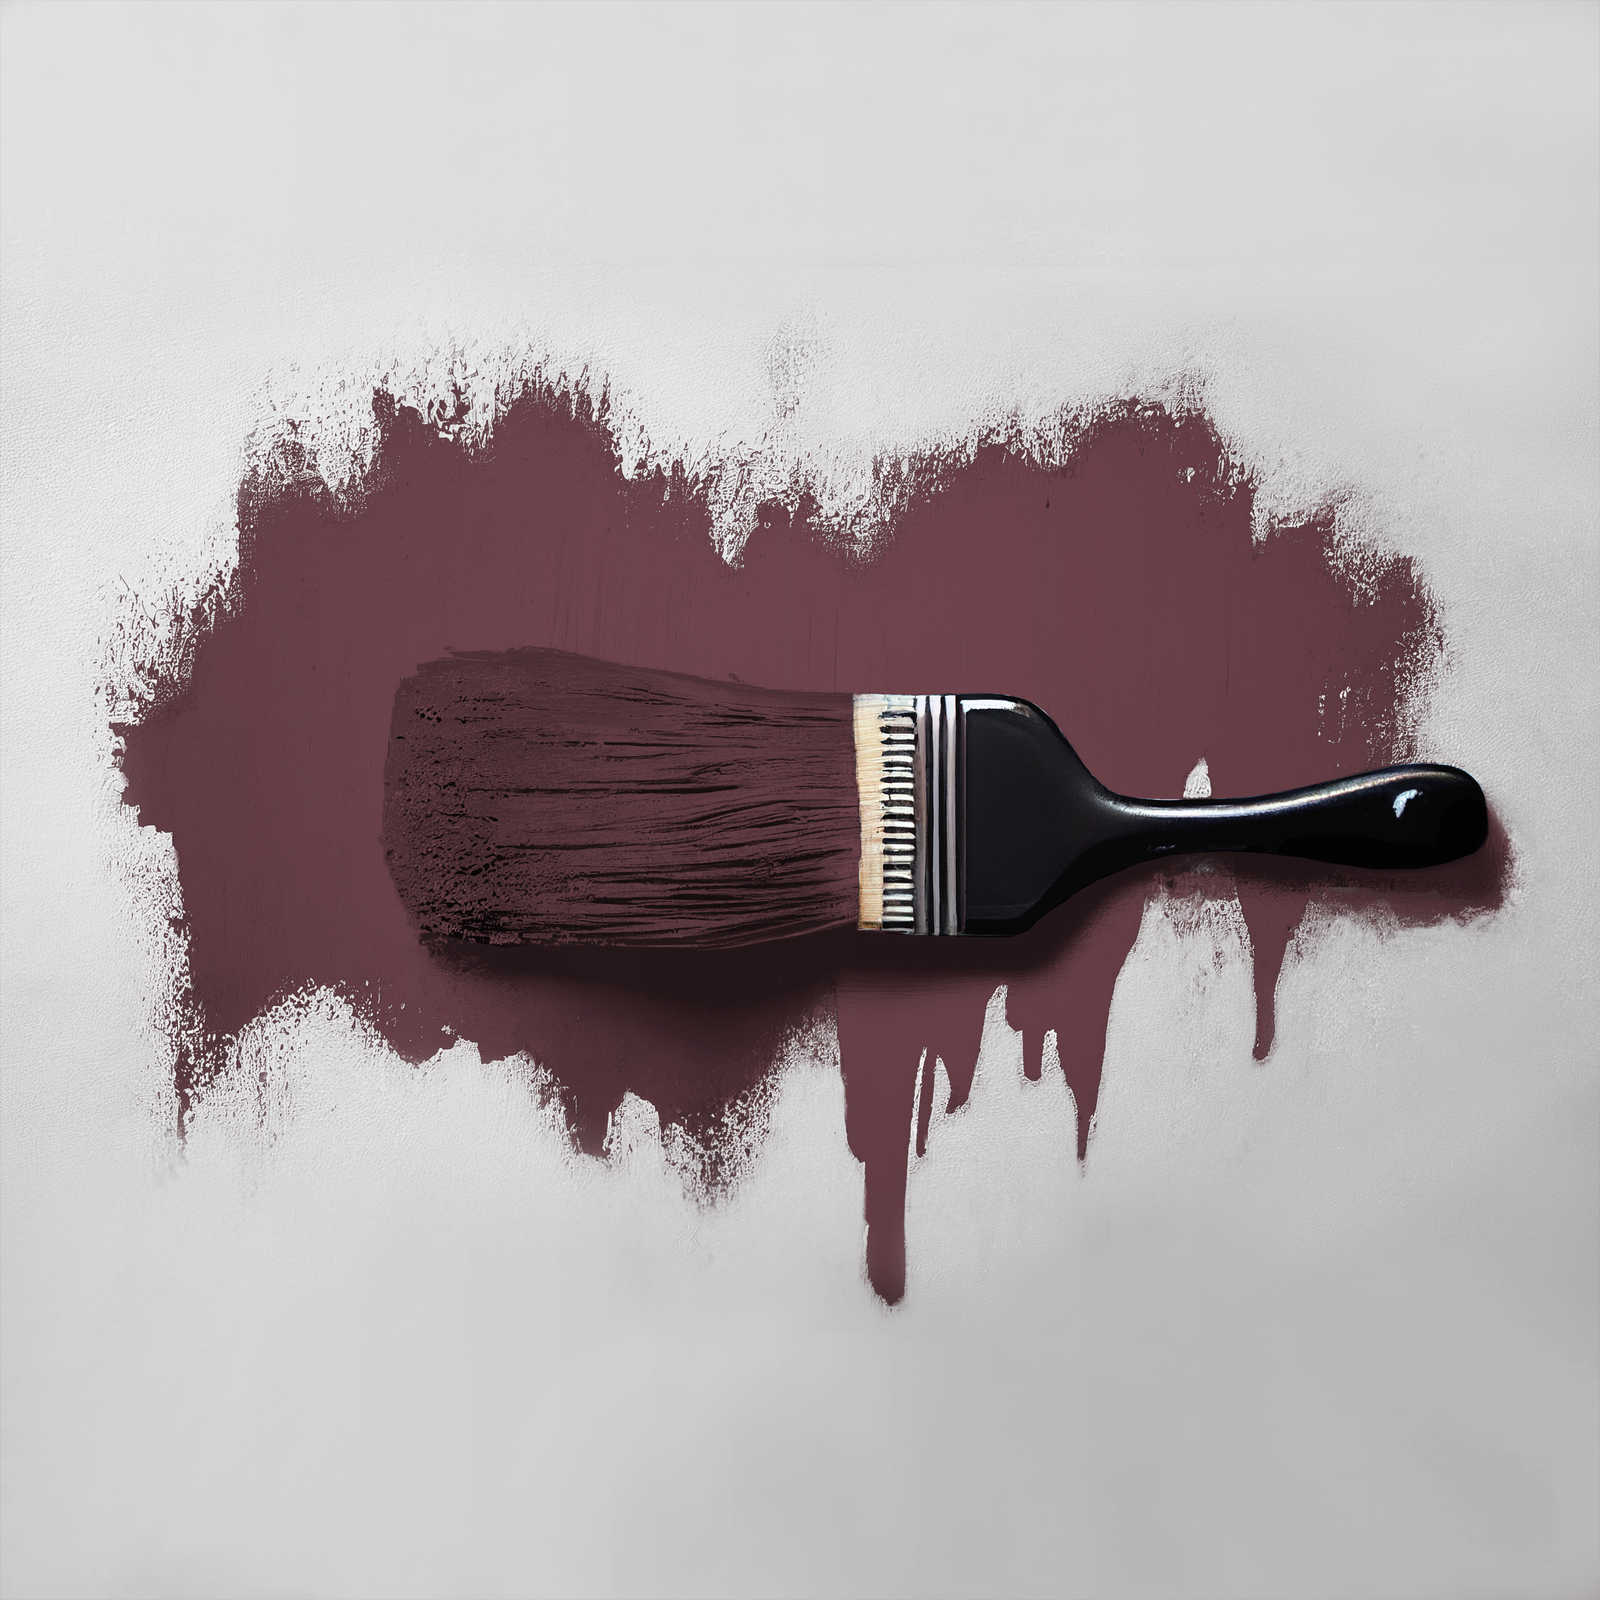             Wandfarbe in einem intensivem Bordeaux »Red Wine« TCK7013 – 2,5 Liter
        